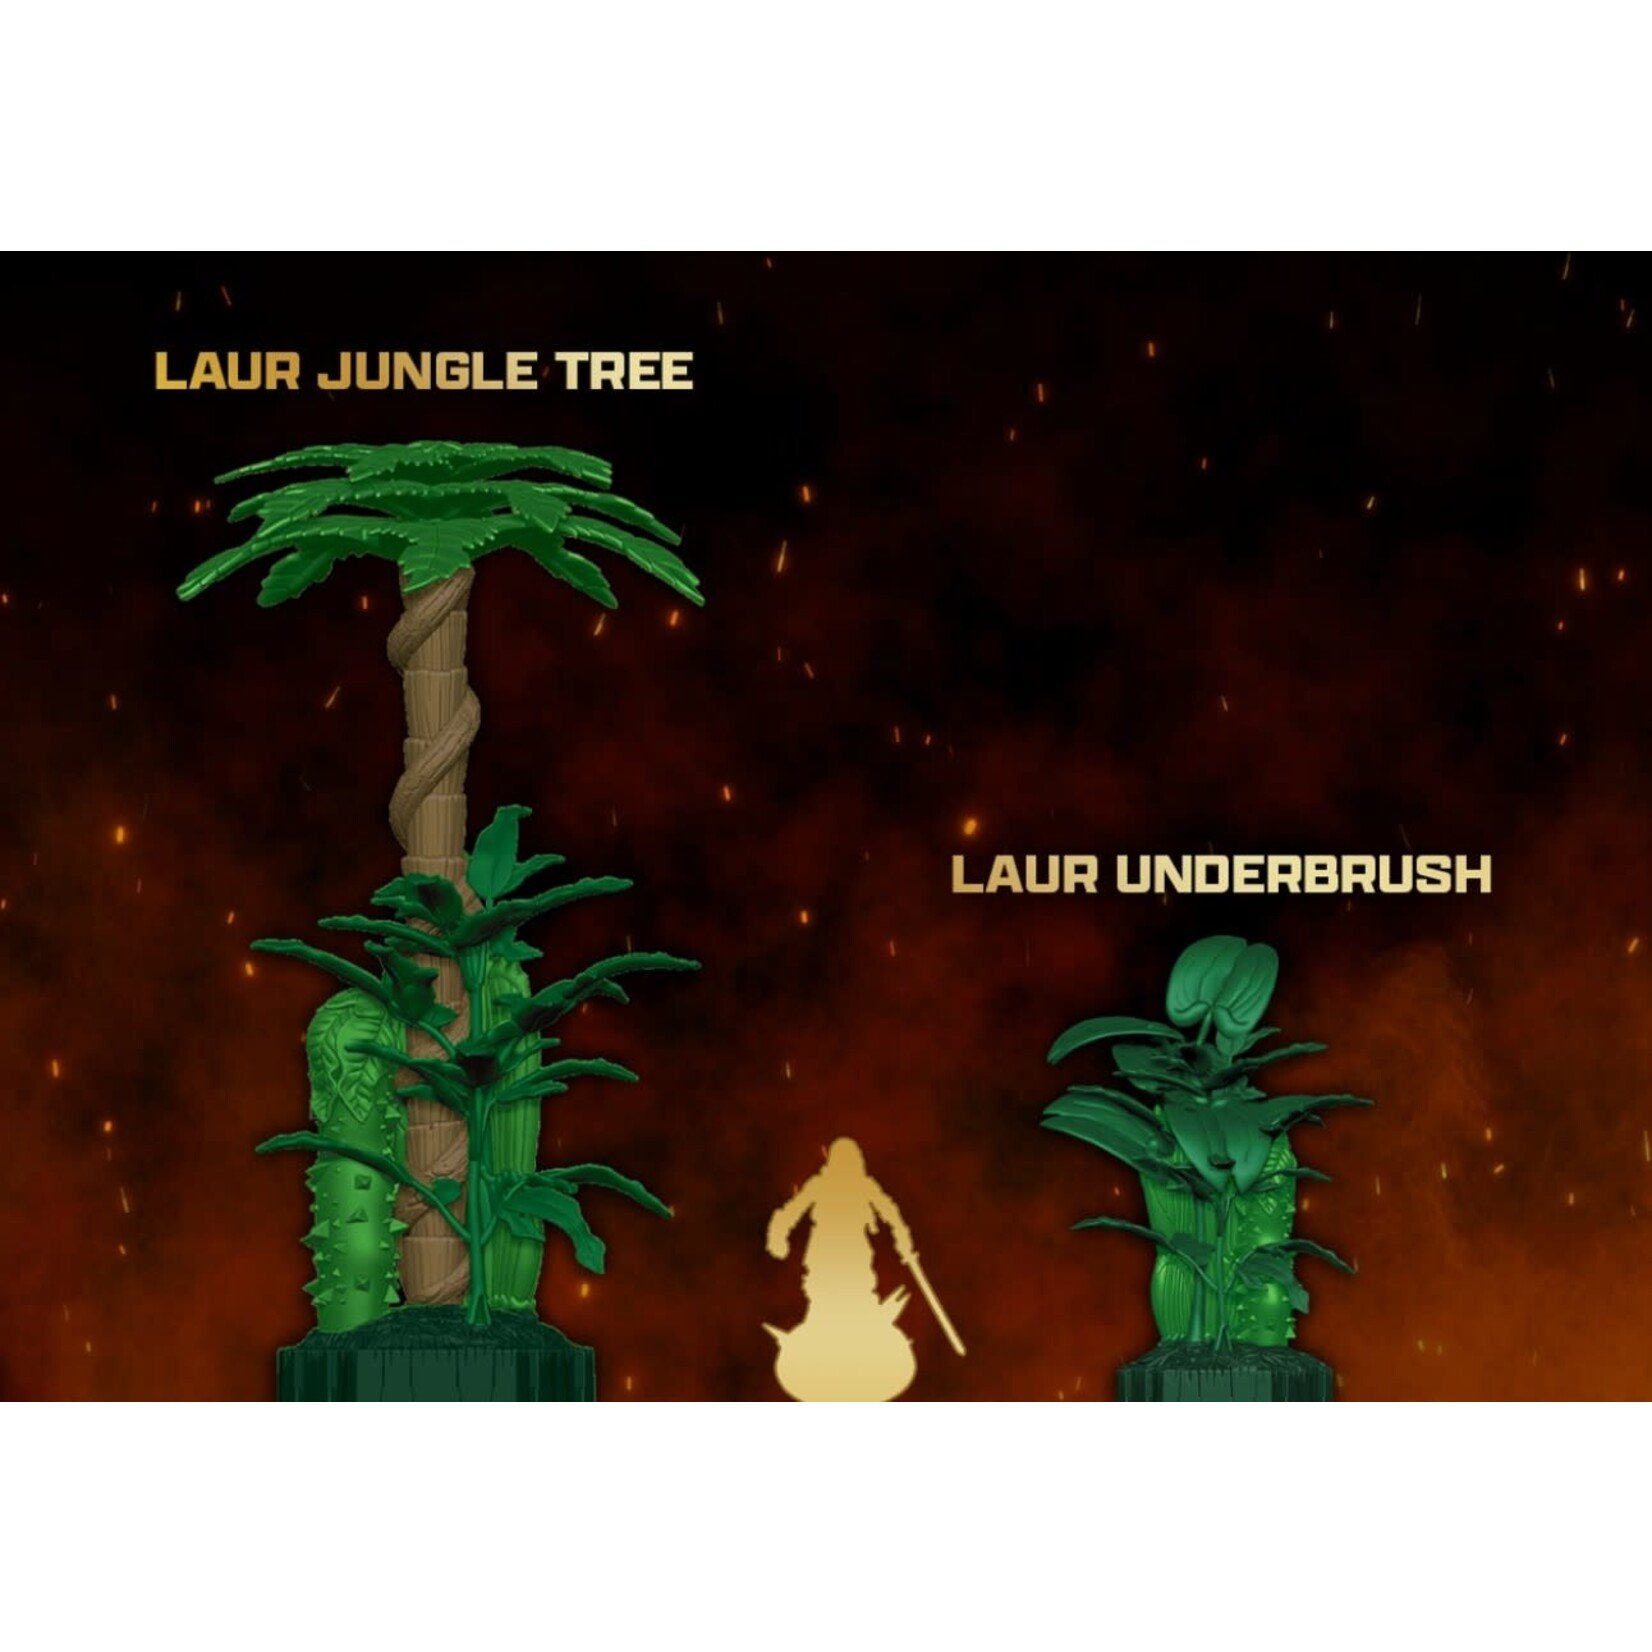 Renegade Game Studios PRERELEASE DEPOSIT Heroscape: The Grove at Laur's Edge Terrain System